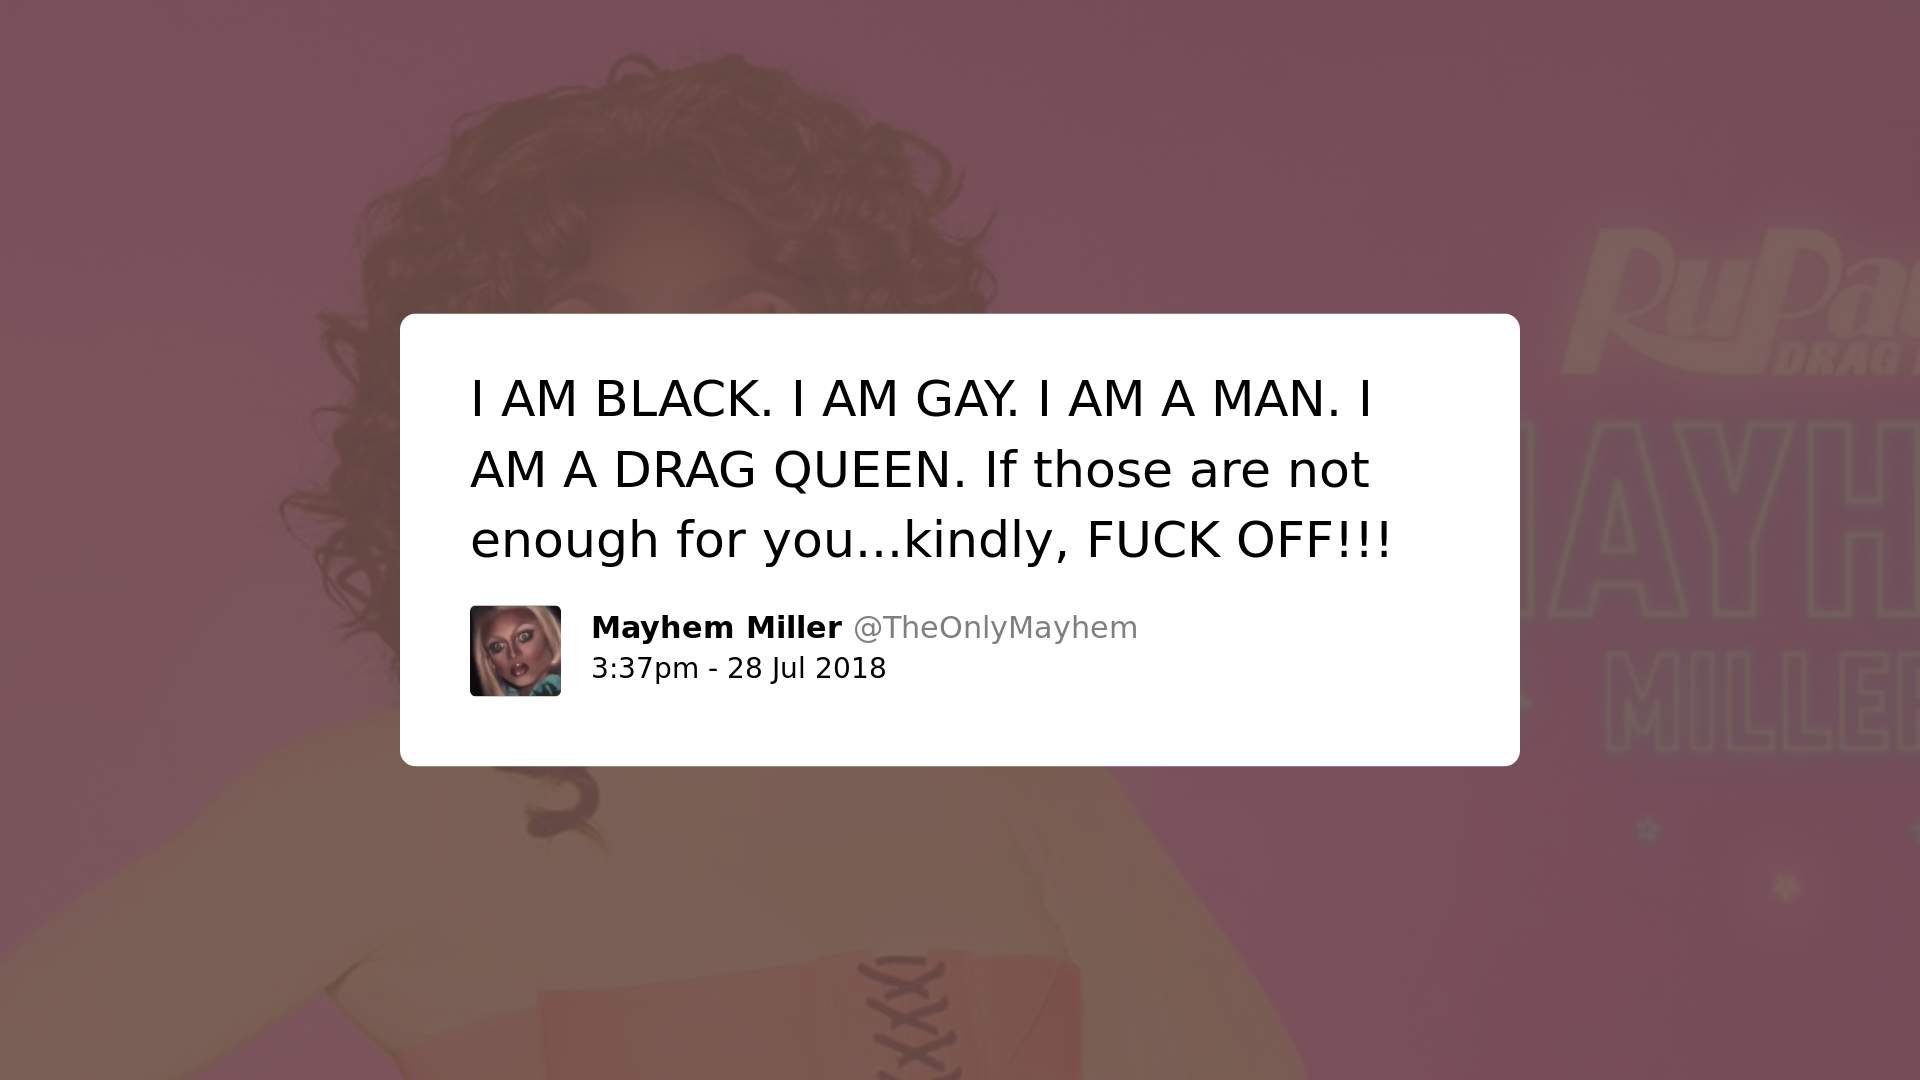 Print screen de postagem de Mayhem Miller com o texto: I AM BLACK. I AM GAY. I AM A MAN. I AM A DRAG QUEEN. If those are not enough for you... kindly, FUCK OFF!!!. 